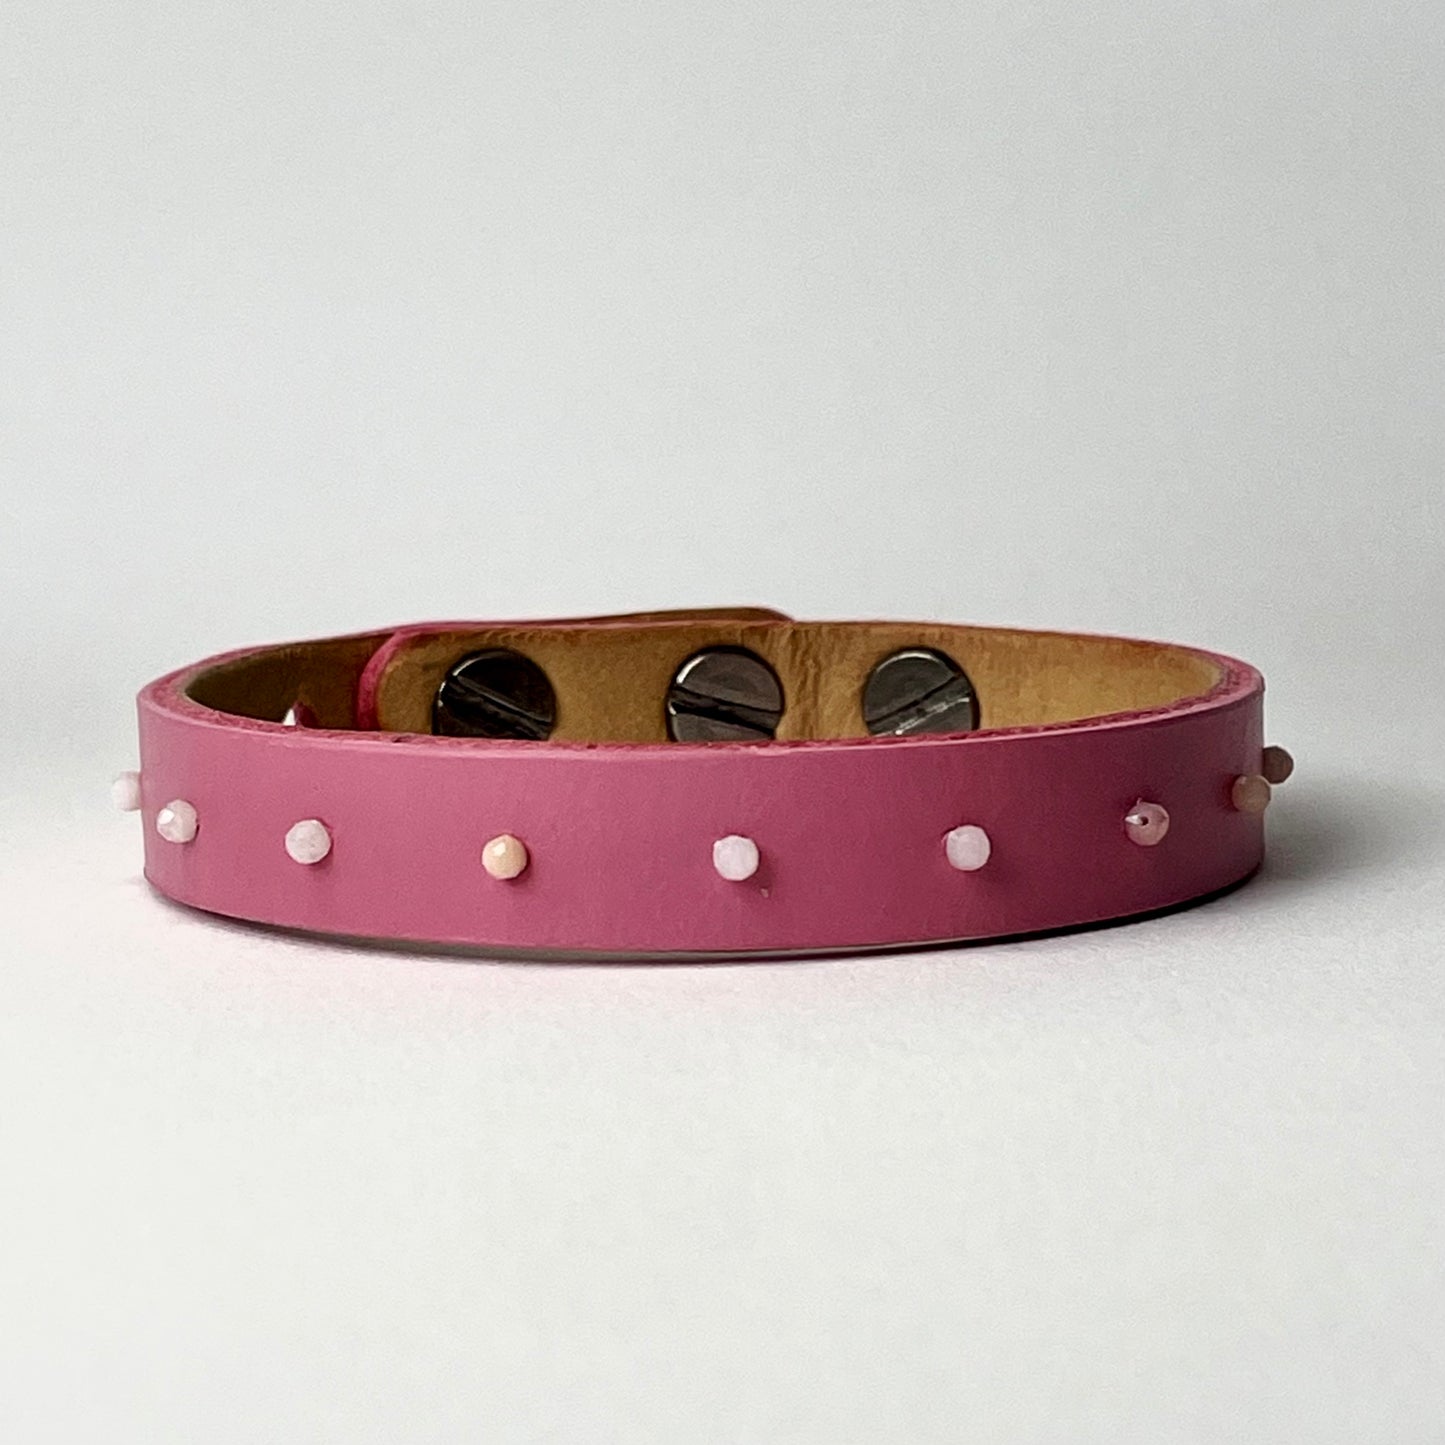 CELEBRATE Stacking Bracelet - in bright, bold colors